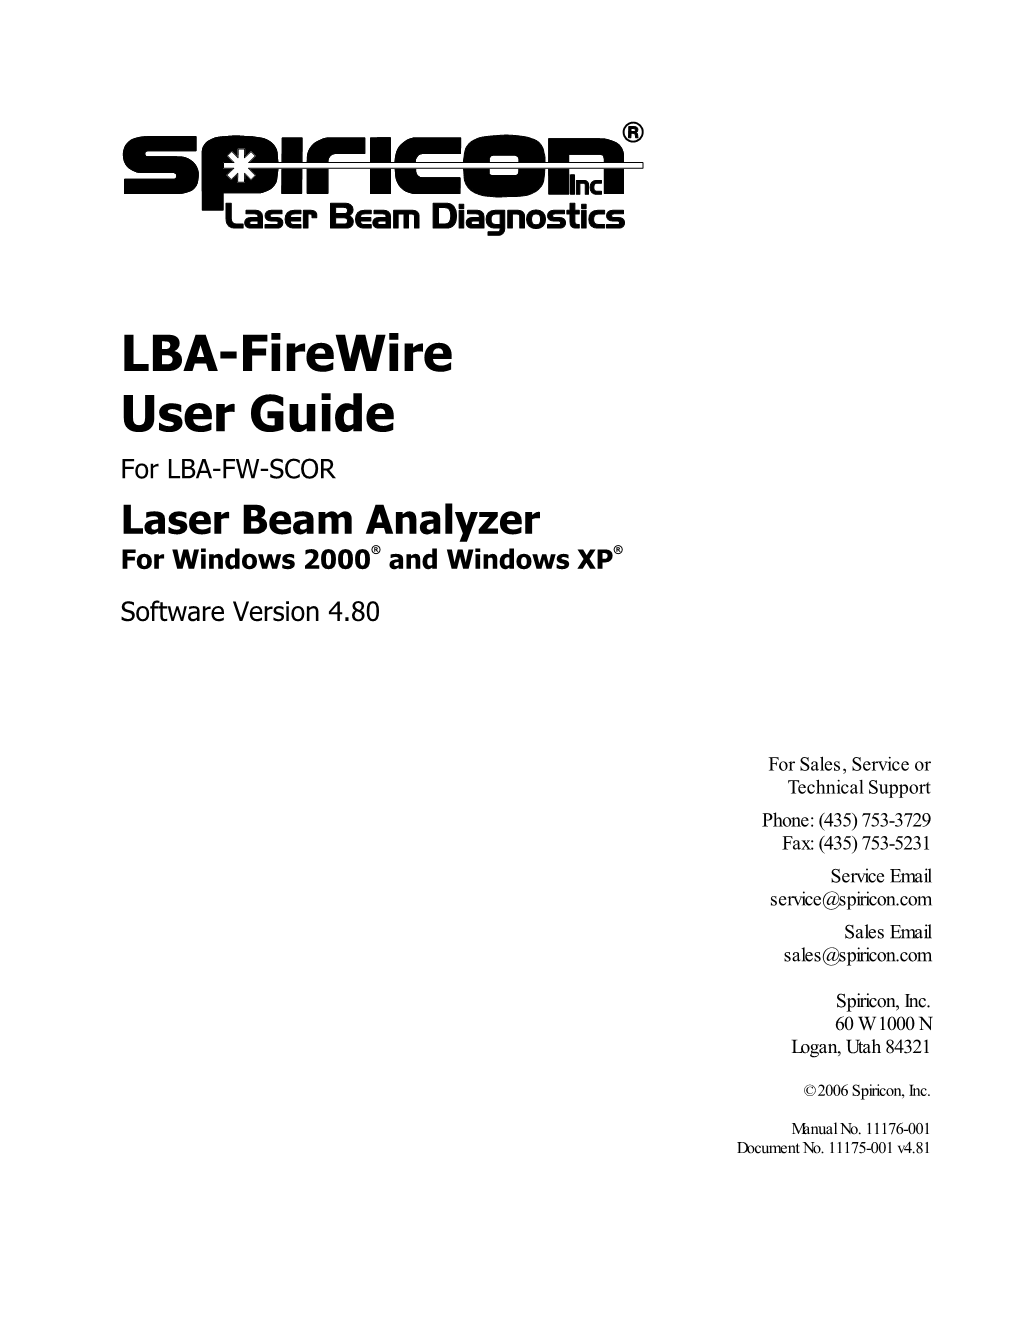 LBA-Firewire User Guide